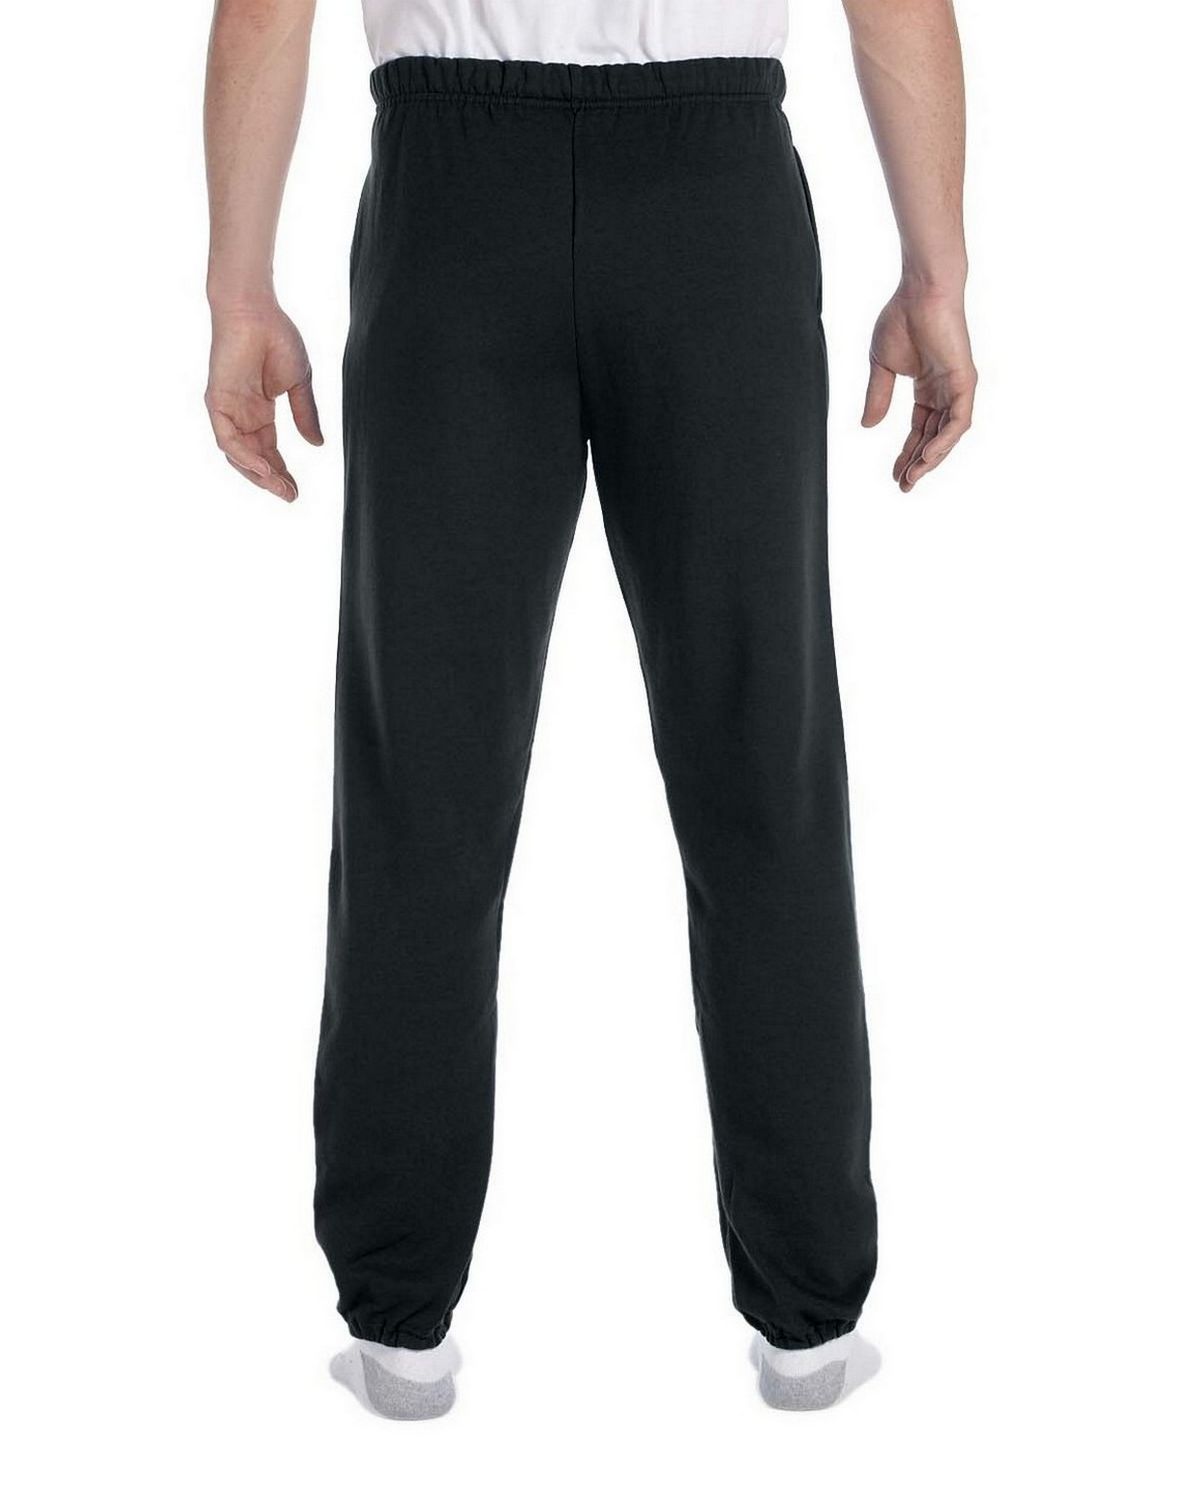 Buy Jerzees 4850P 9.5 oz Super SweatS 50/50 Pocketed Sweatpants